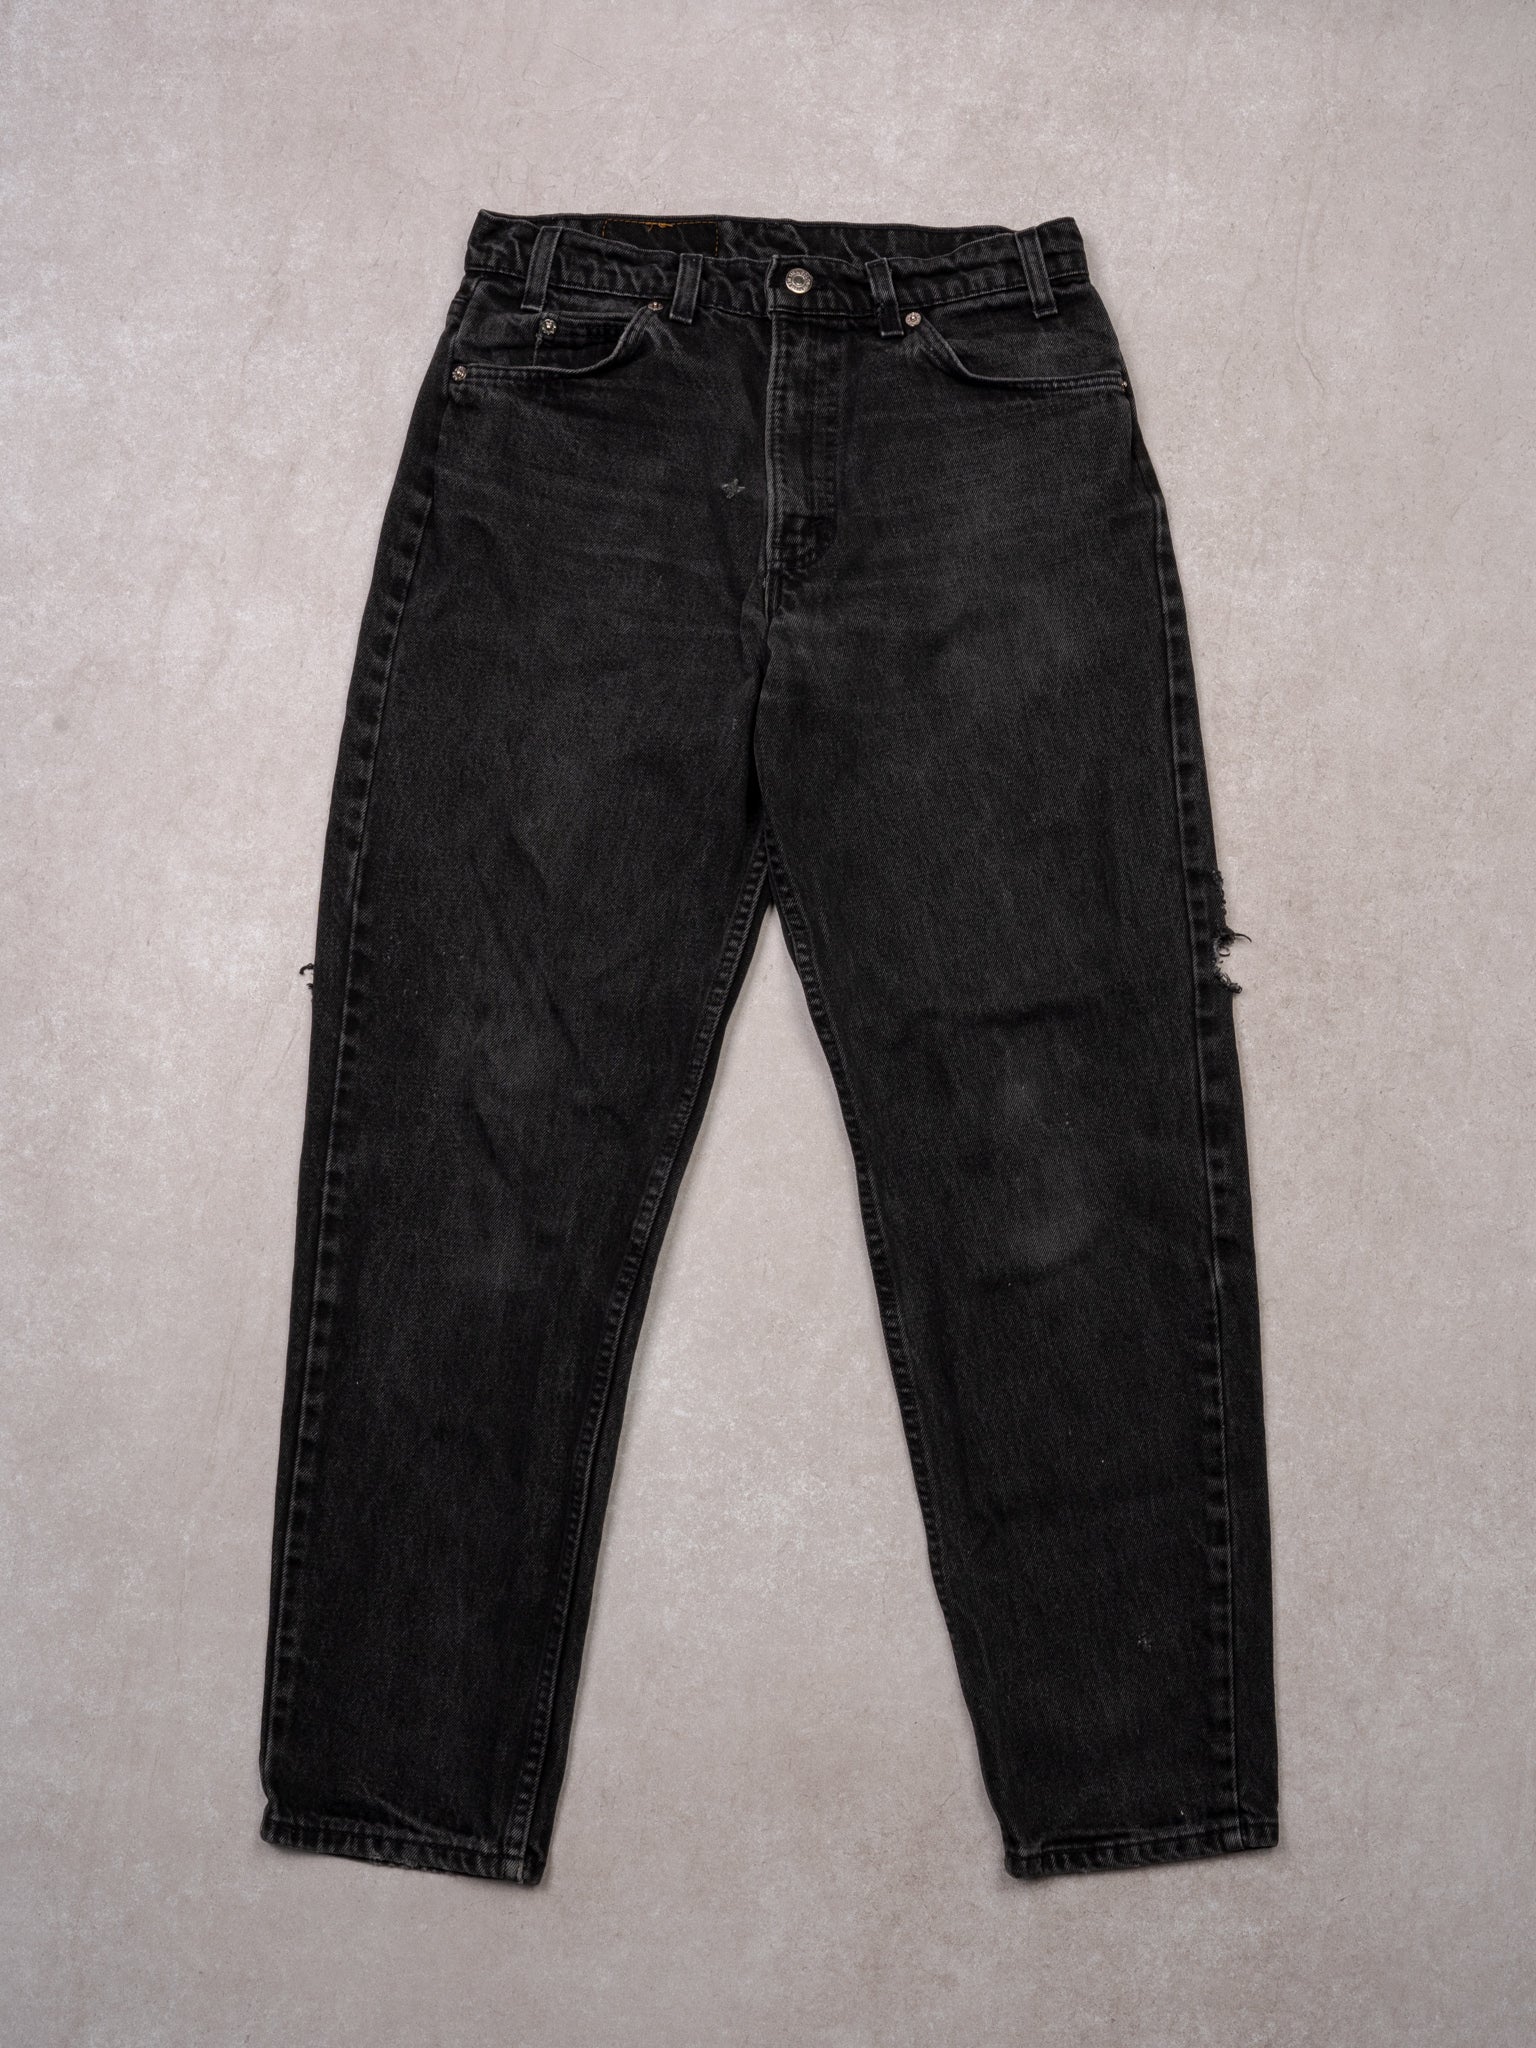 Vintage 80s Black Levi 550 Relax fit Denim Jean (30x28)